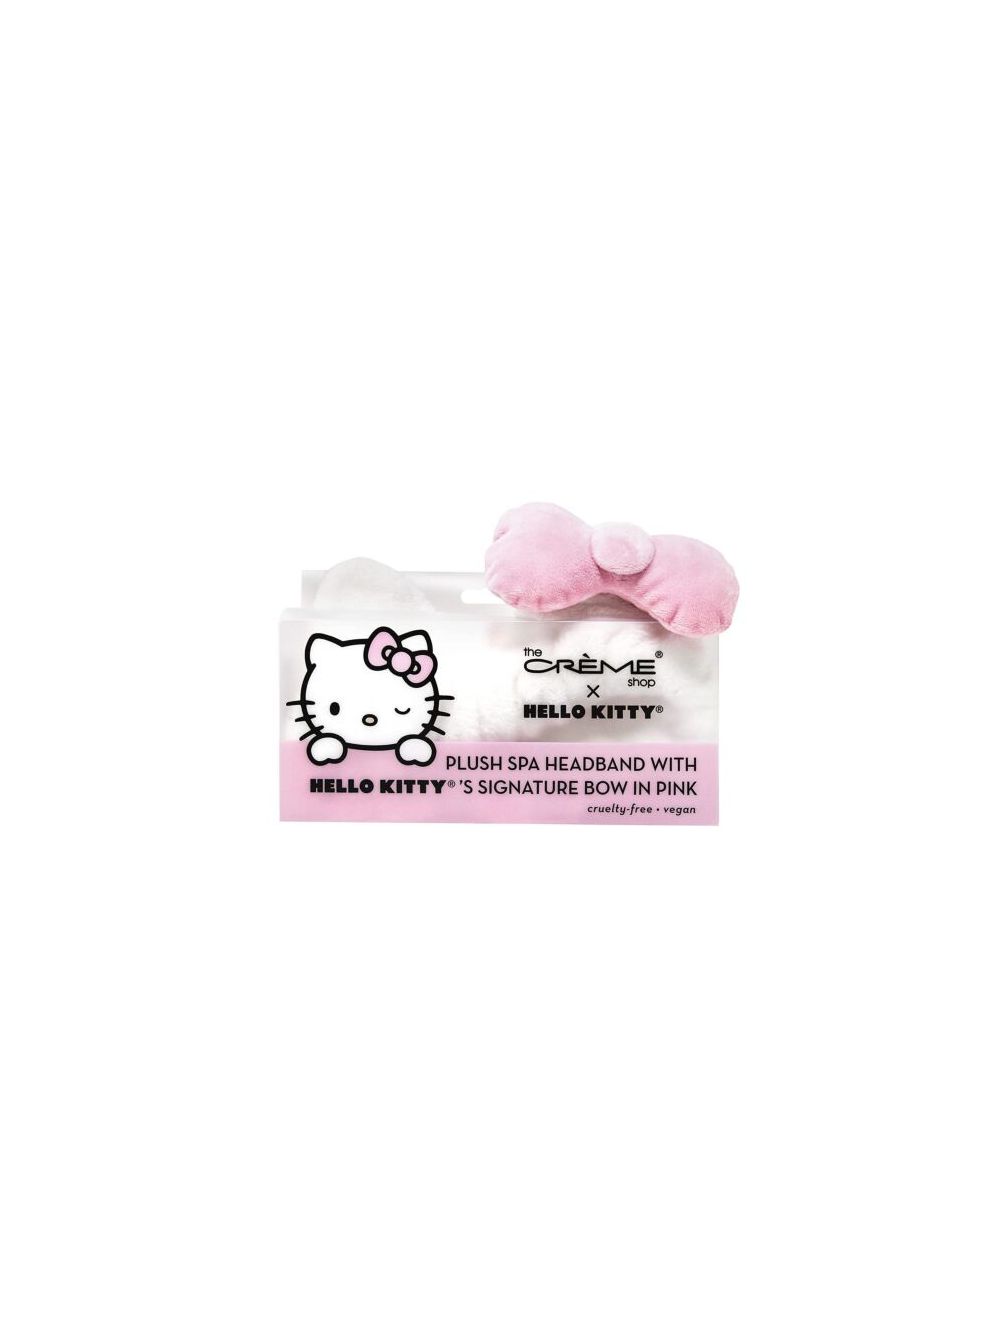 TheCremeShop Hello Kitty Plush Spa Headband Signature Pink